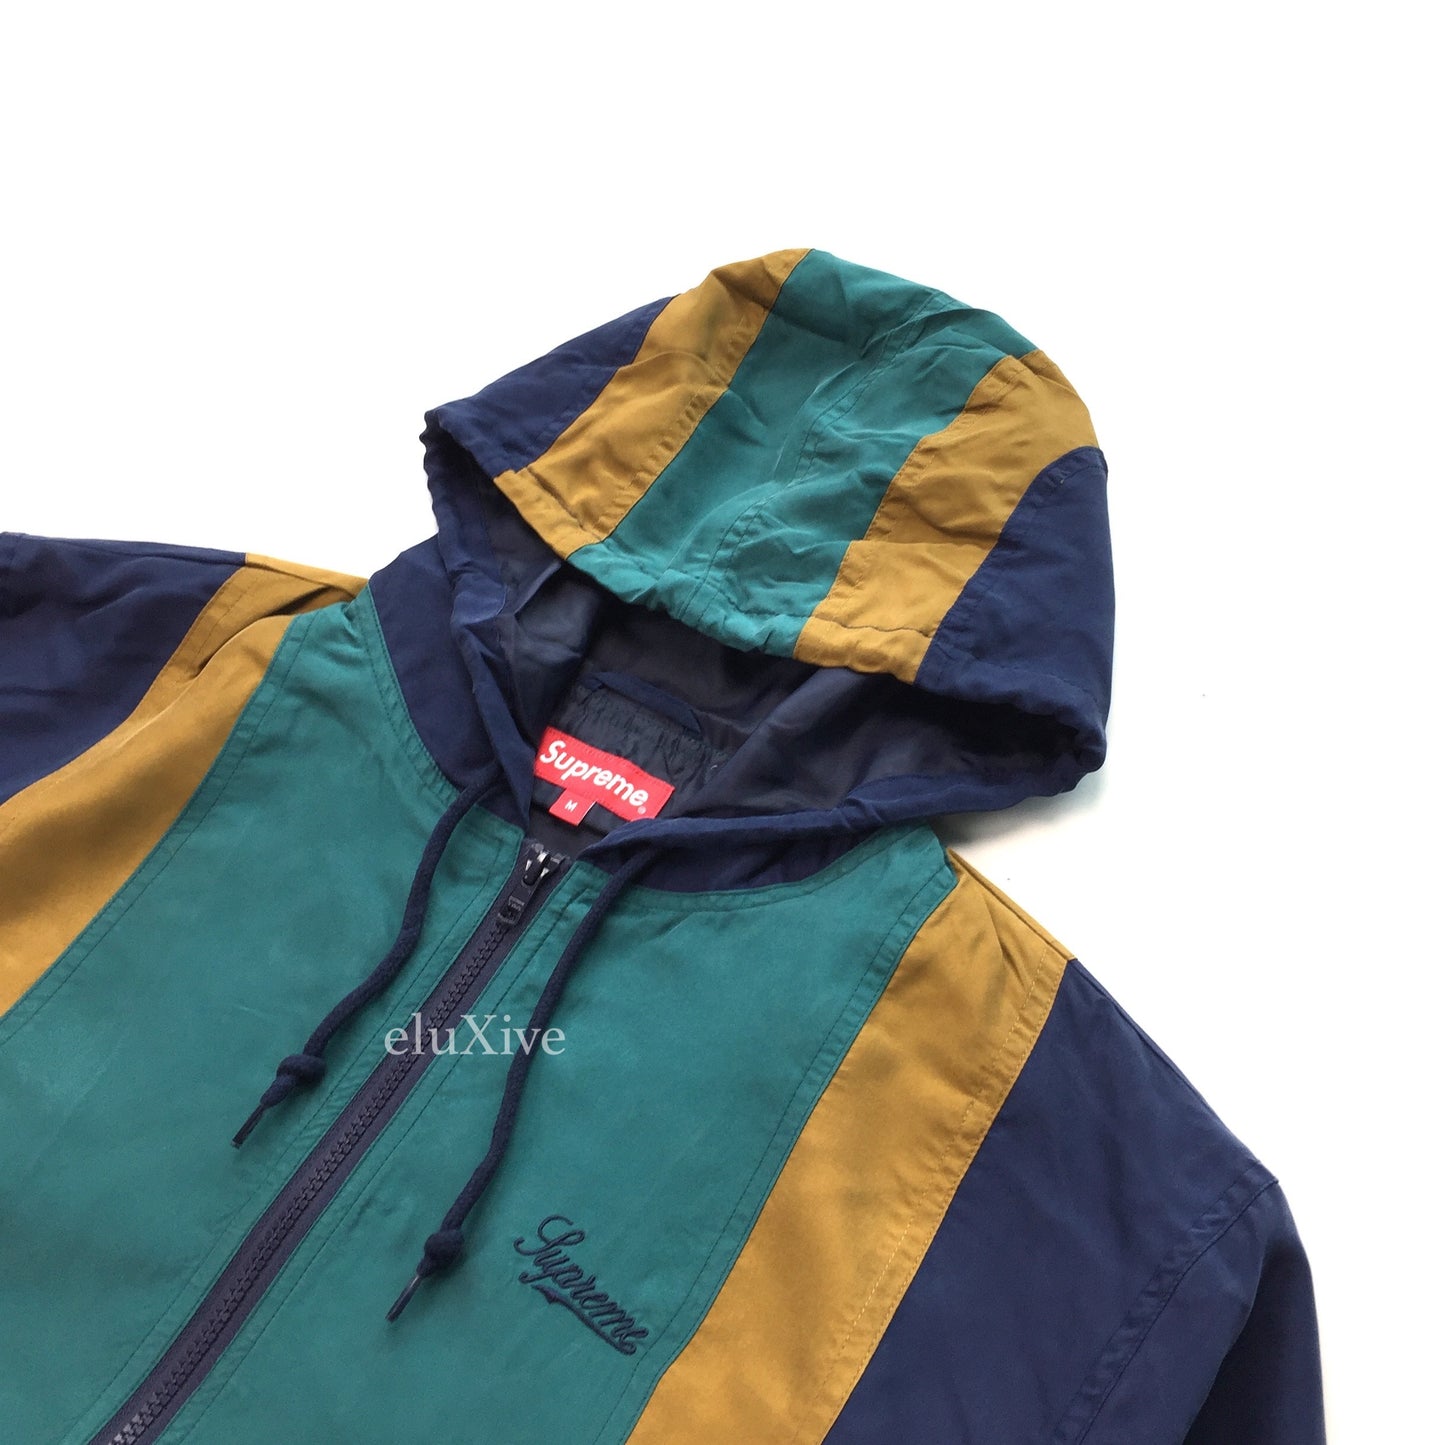 Supreme - Paneled Silk Hooded Track Jacket